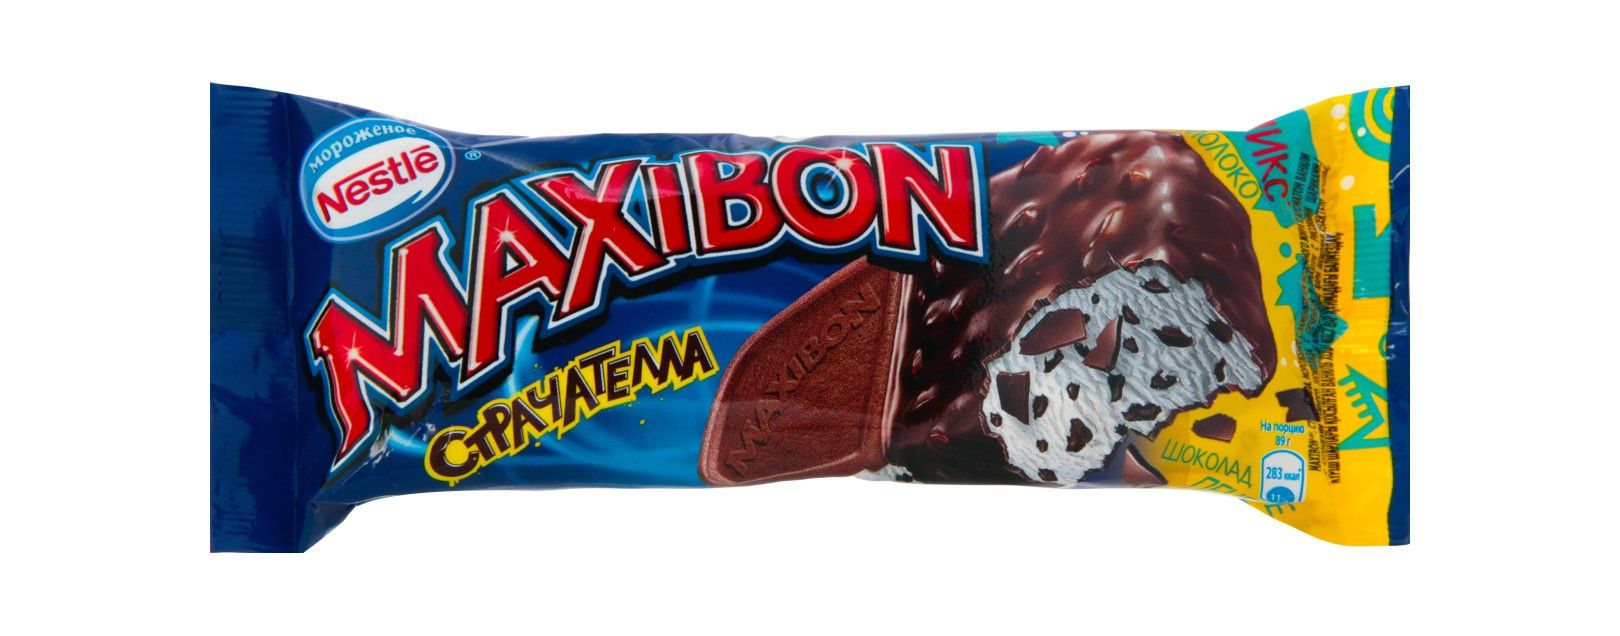 Мороженое Nestle Maxibon Страчателла, 89 г.